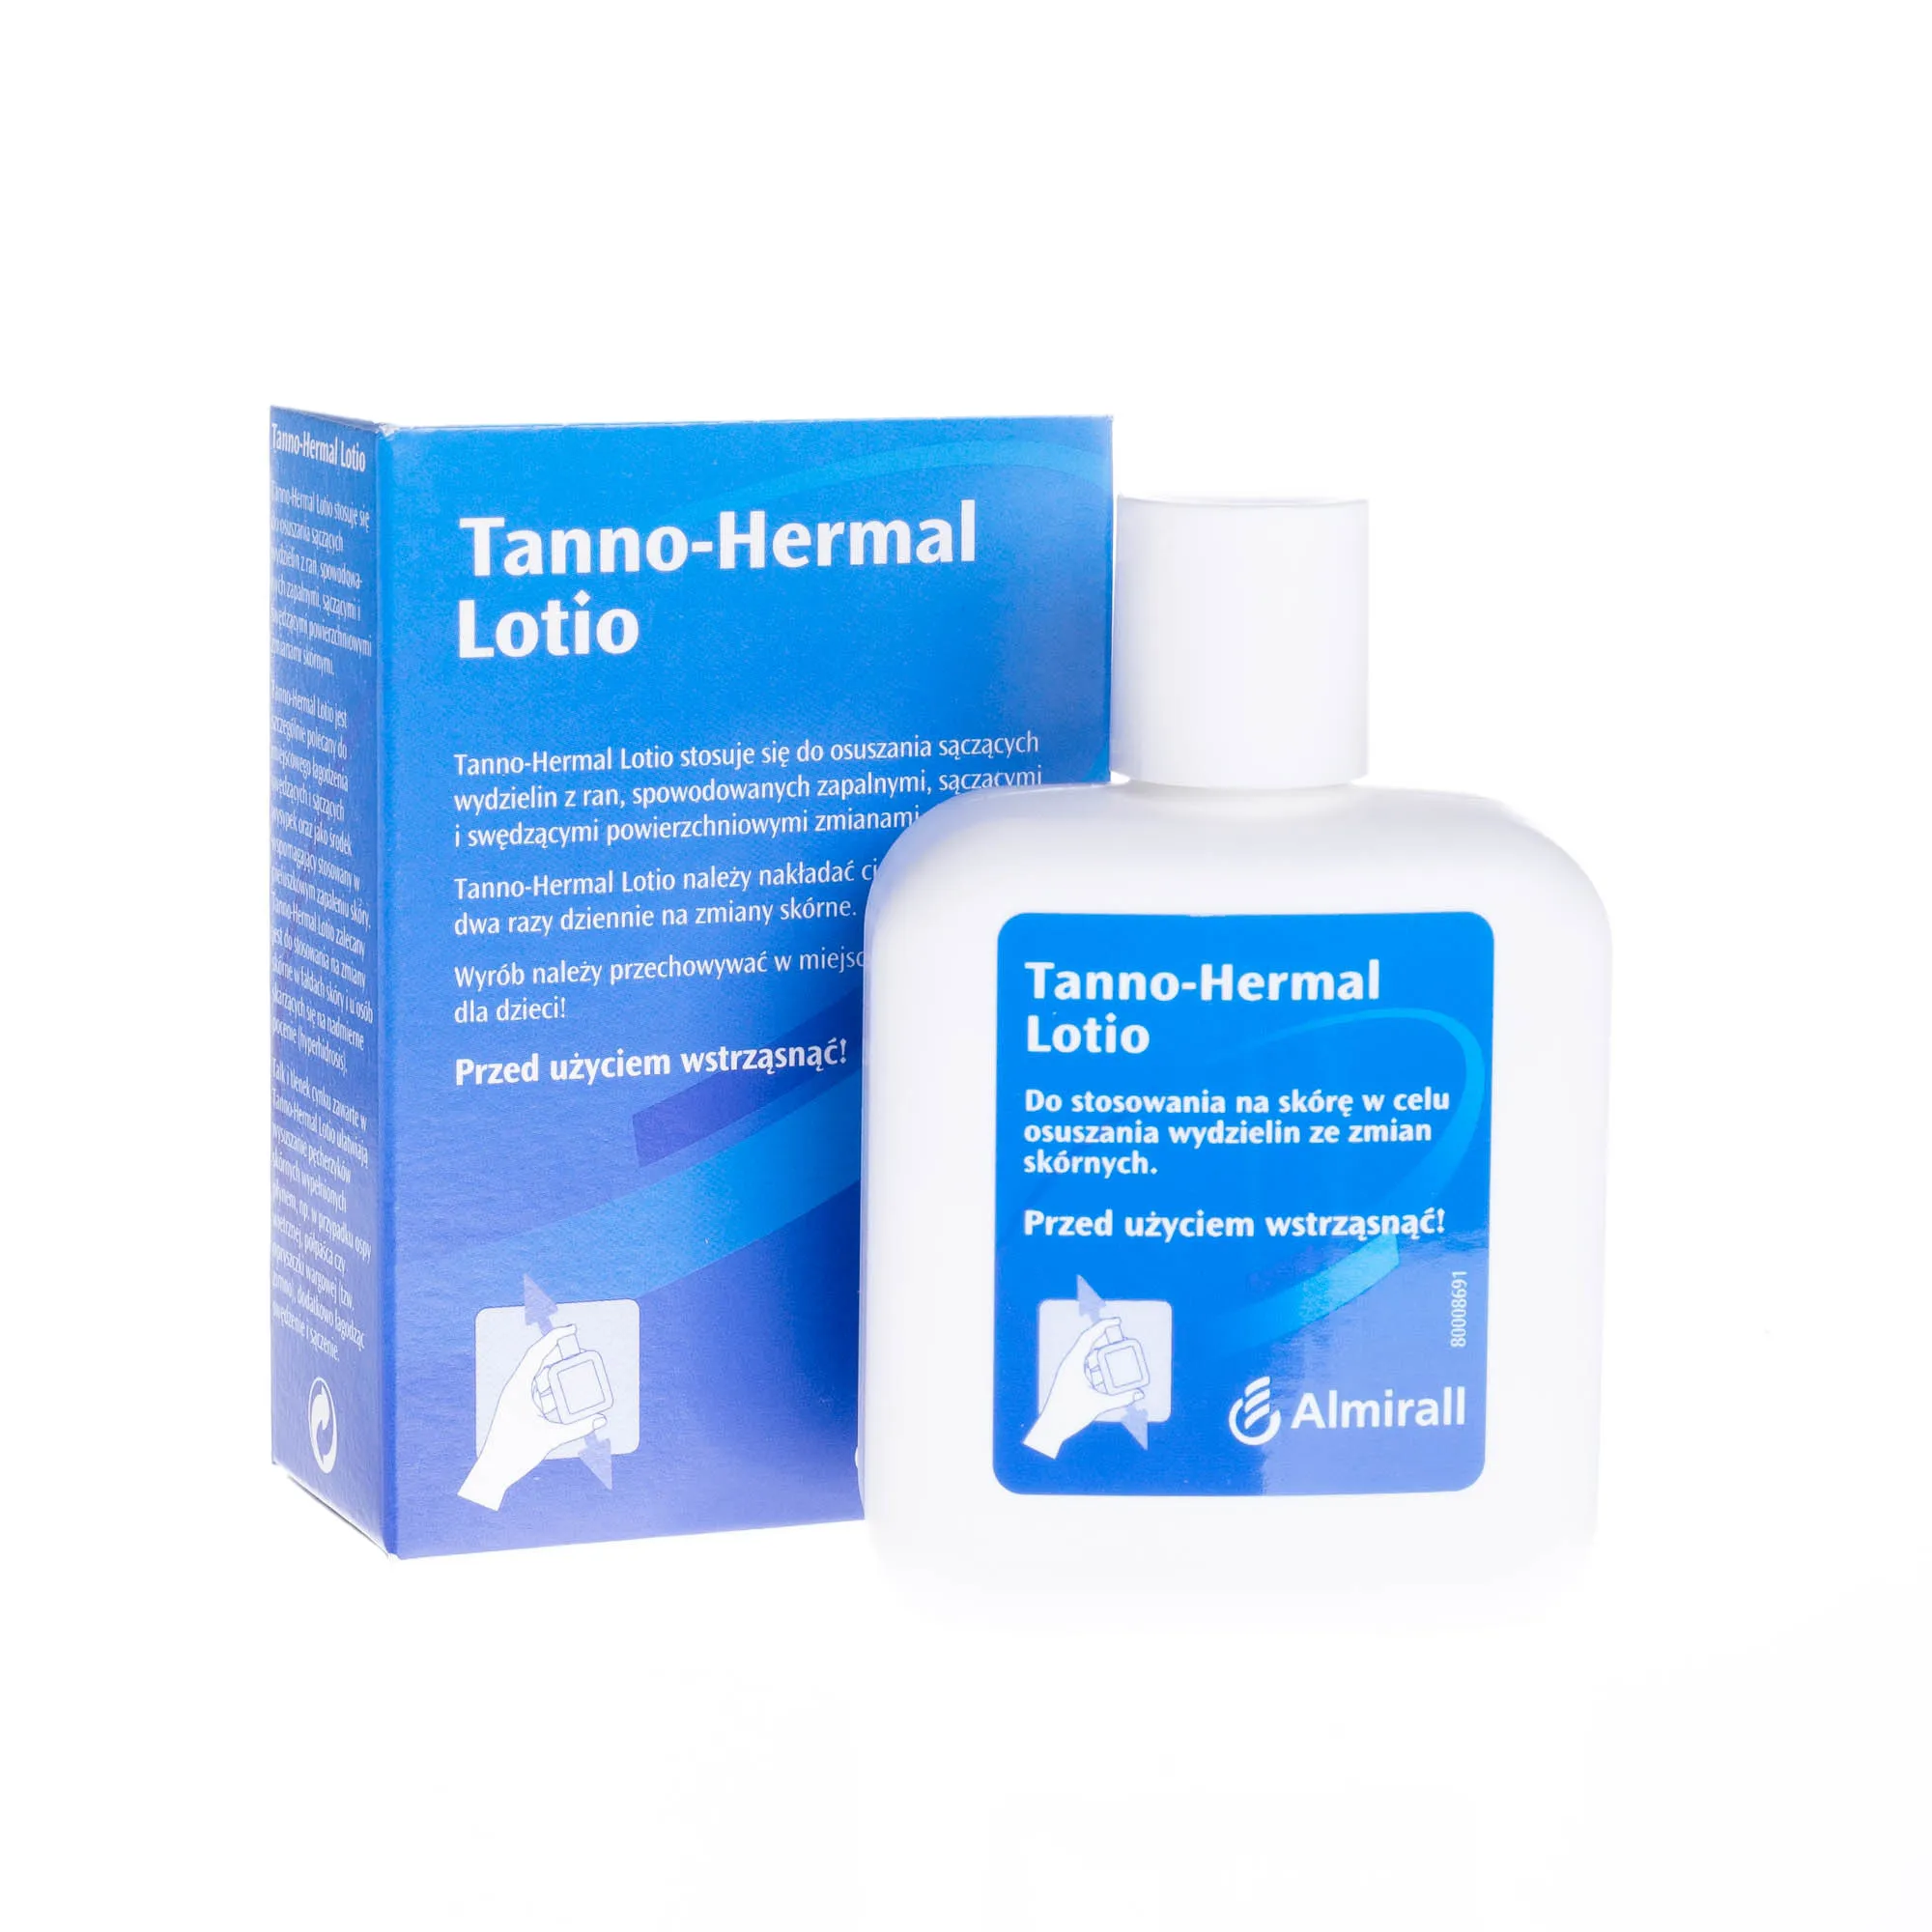 Tanno-Hermal Lotio, 100 g